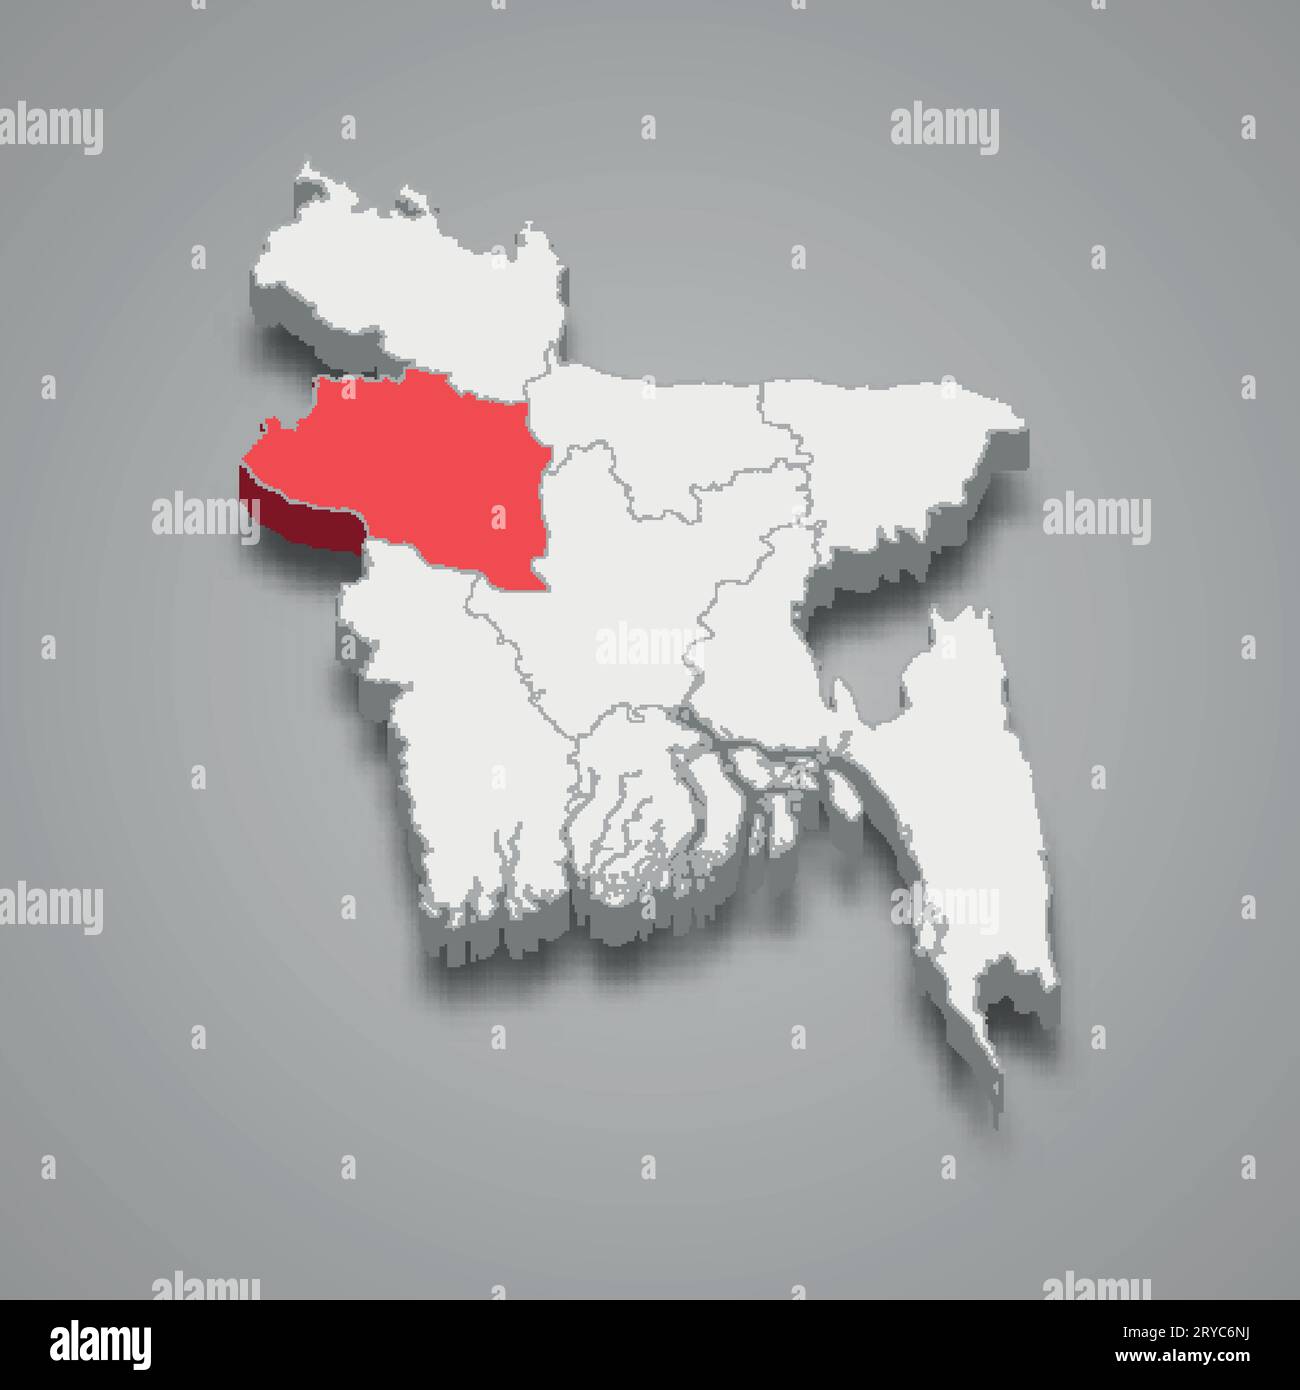 Rajshahi state location within Bangladesh 3d isometric map Stock Vector